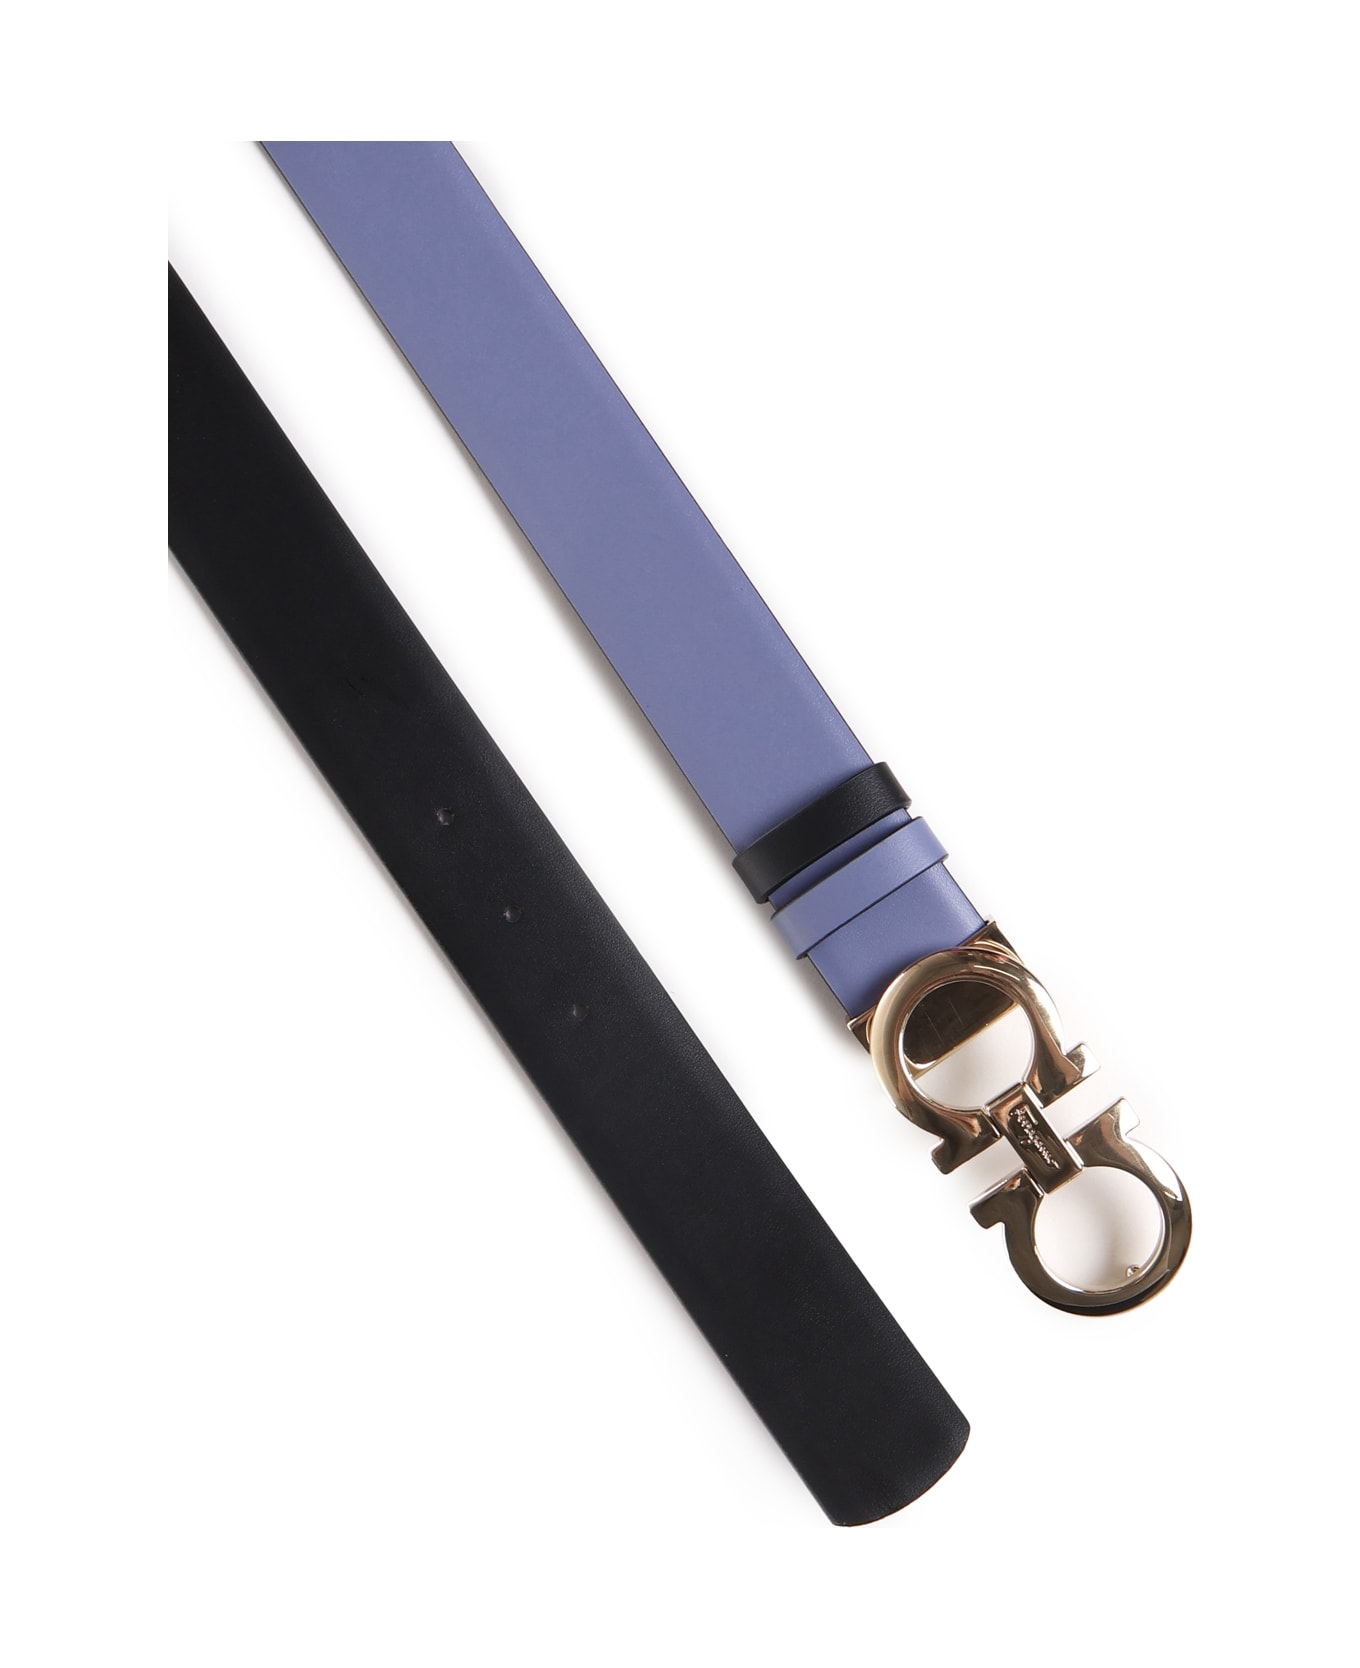 Ferragamo Leather Belt With Metal Gancio Buckle - Violet/black